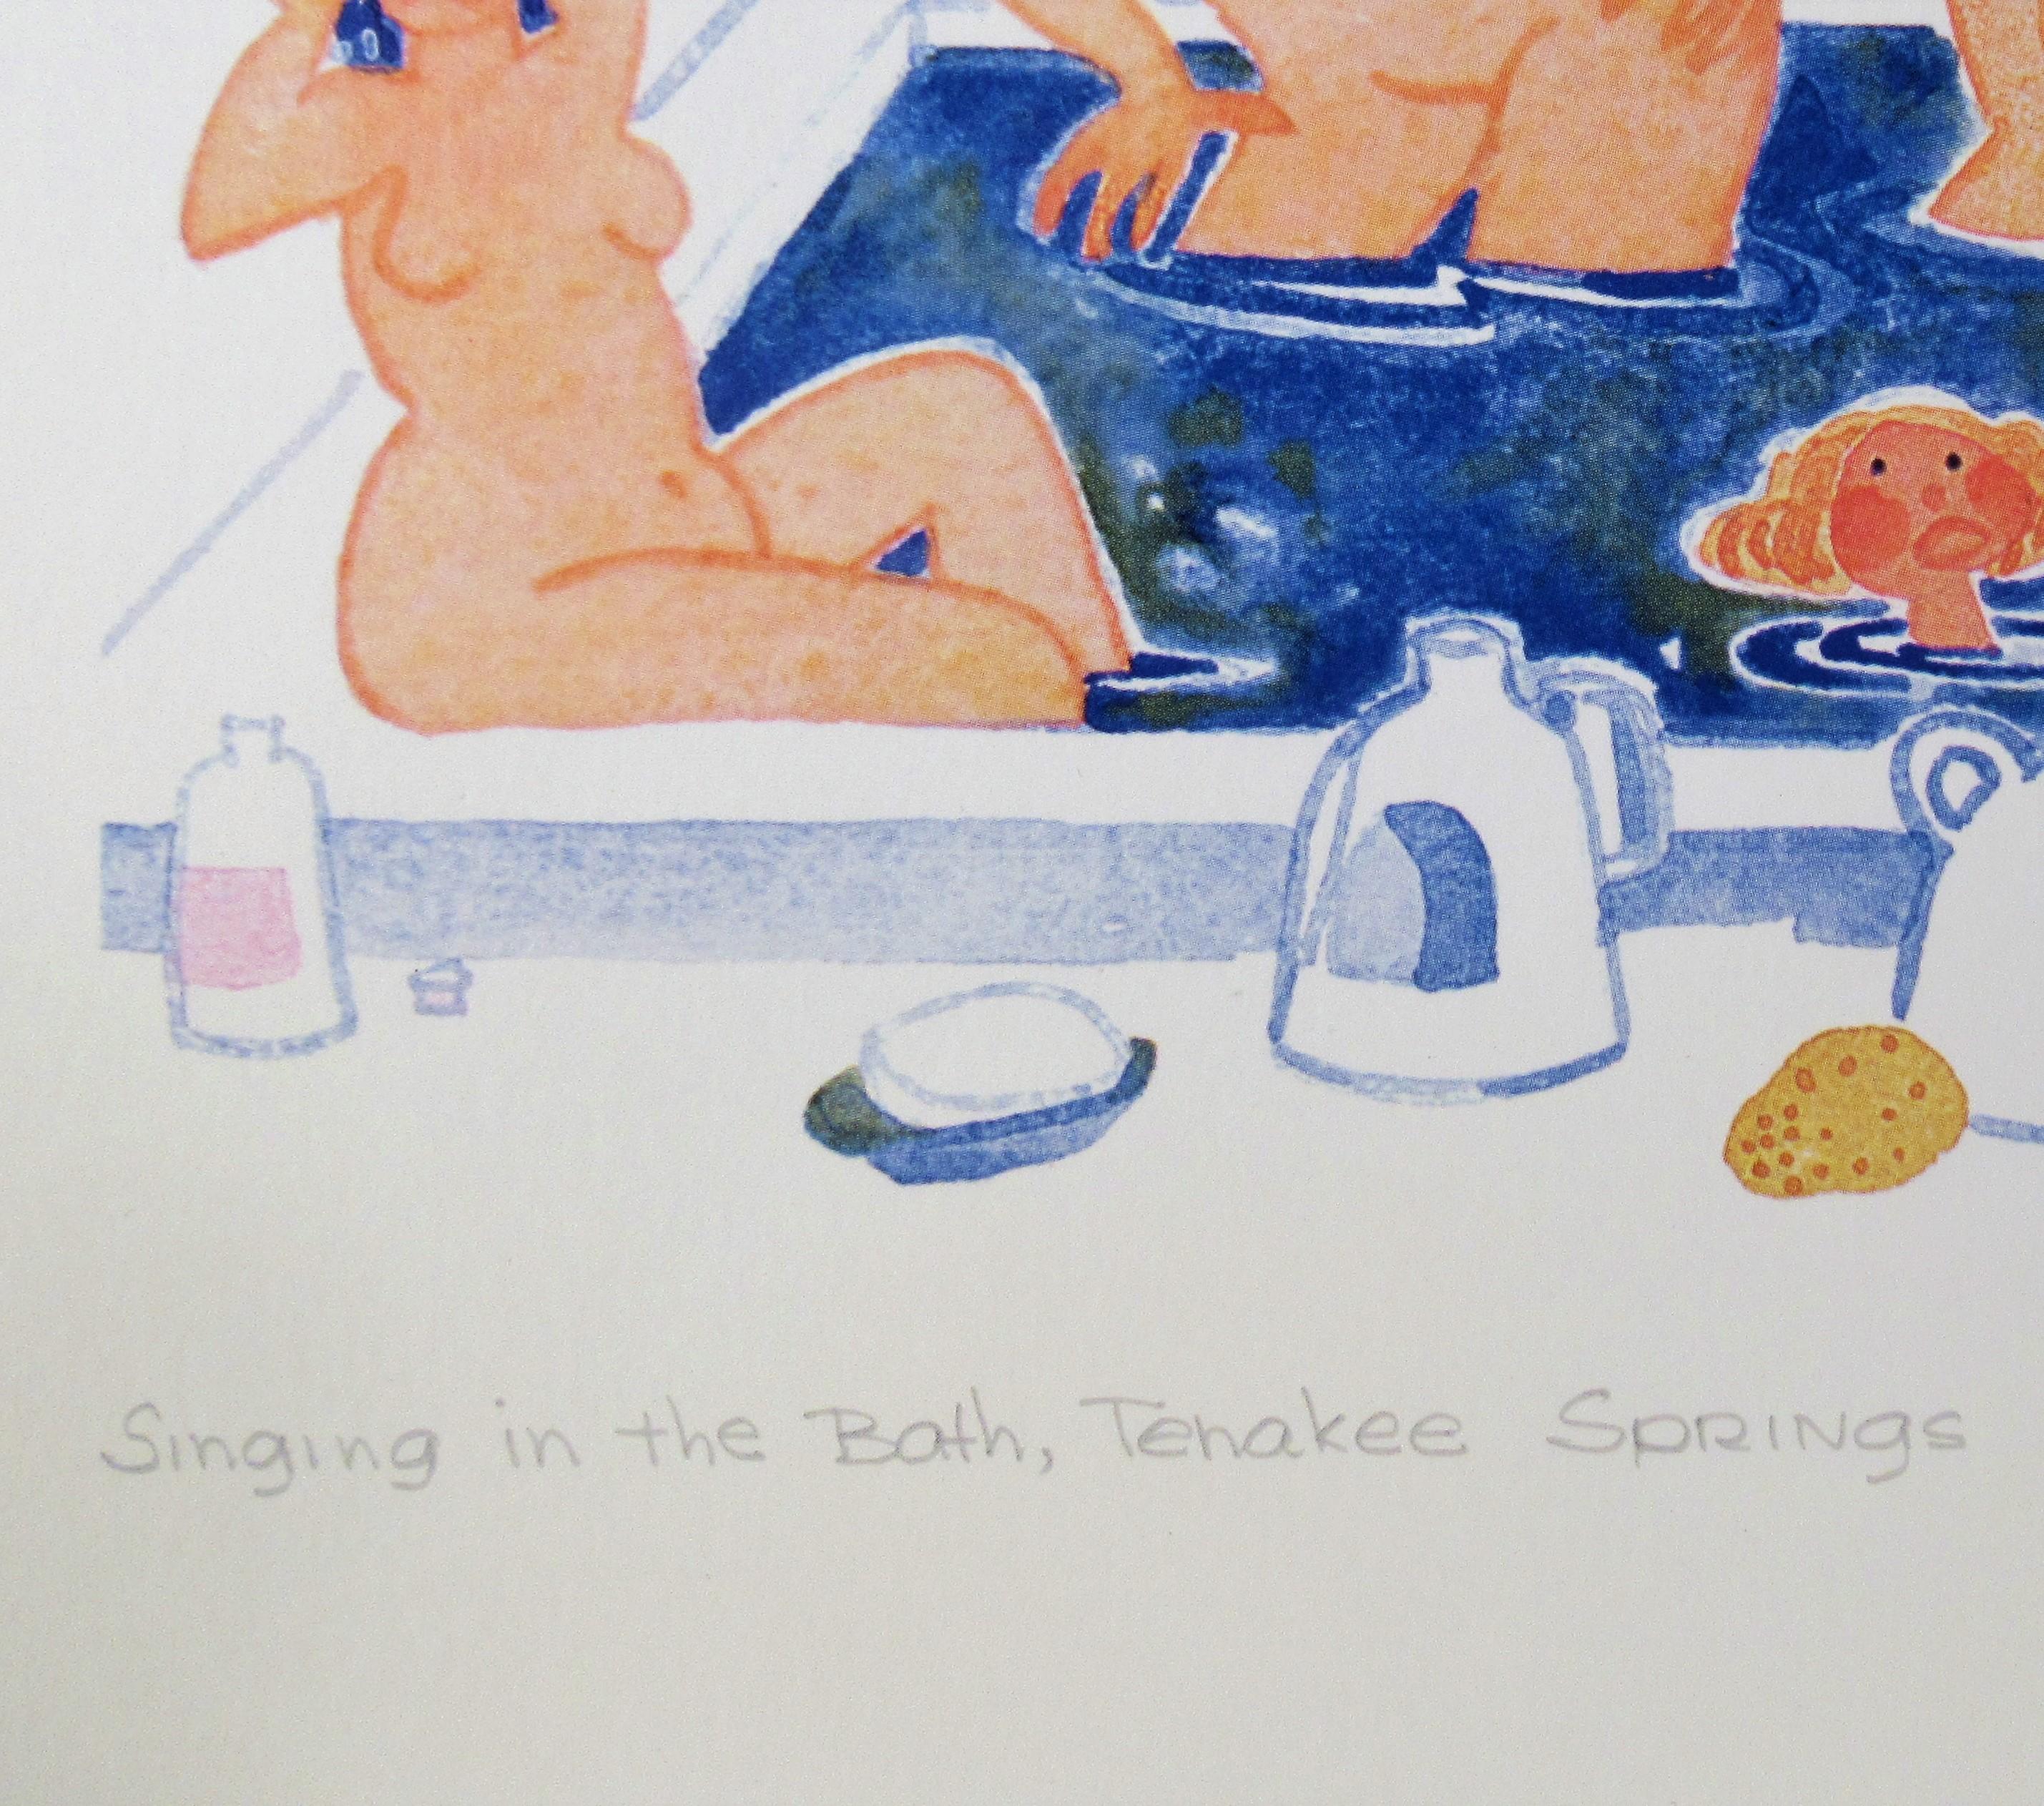 Singing in the Bath, Tenakee Springs - Gray Nude Print by Rie Munoz